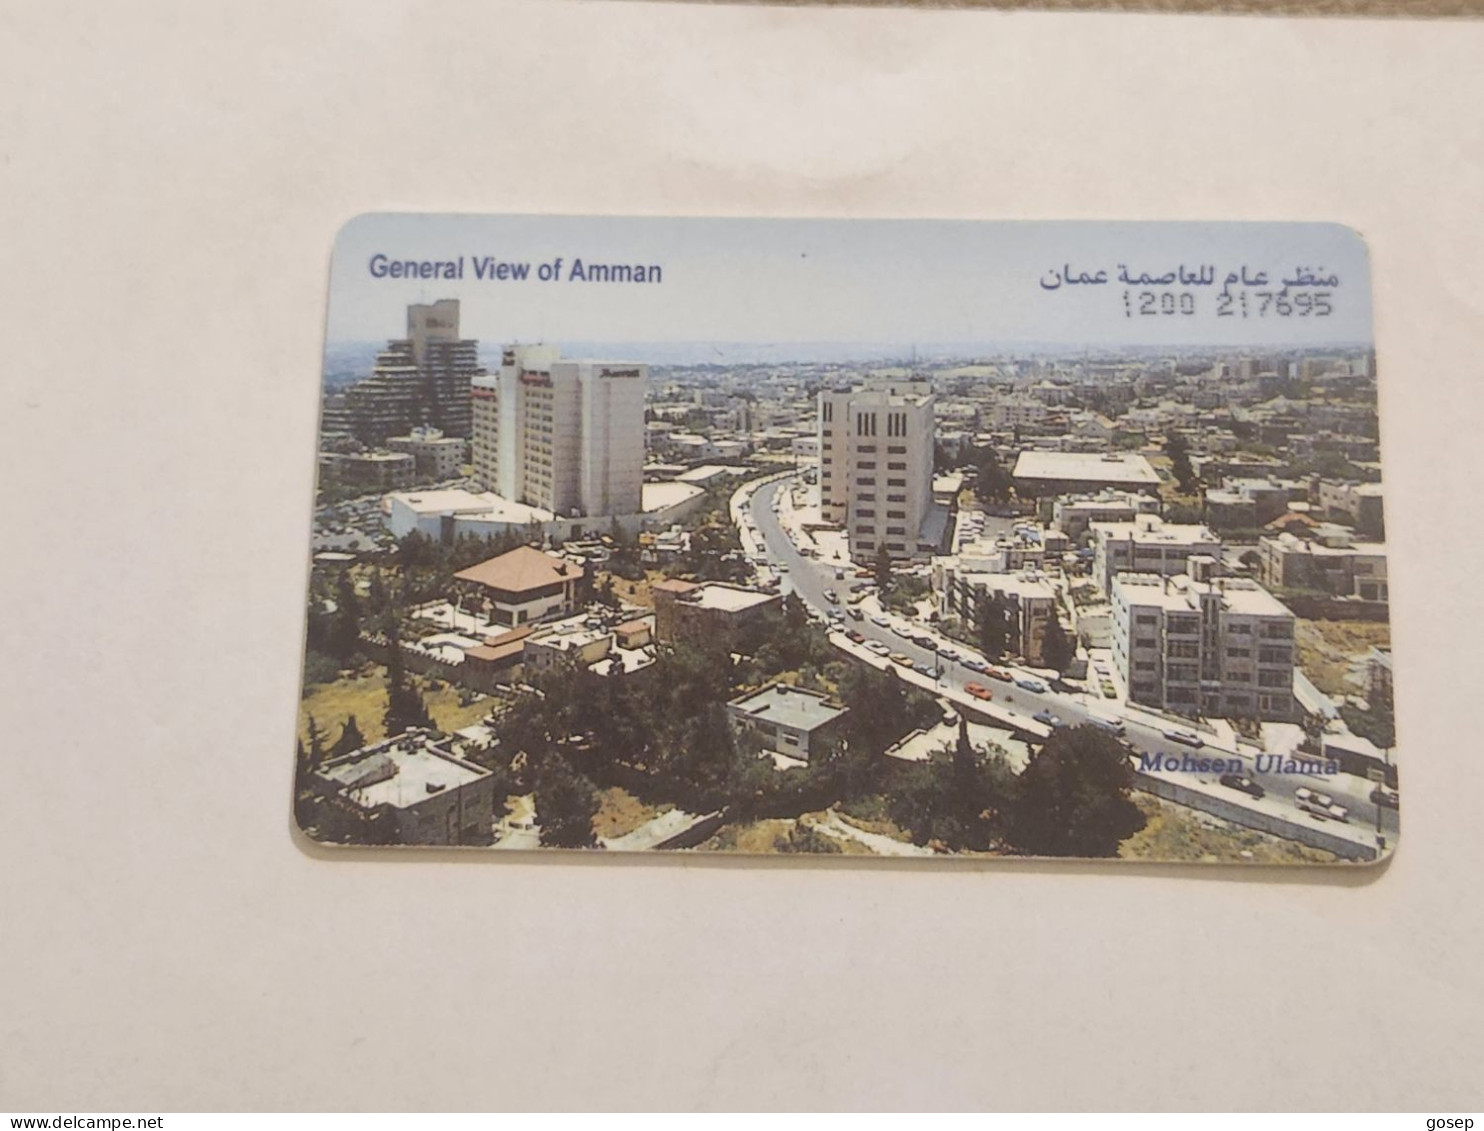 JORDAN-(JO-ALO-0028)-King Abdullah Mosque-(126)-(1200-217695)-(15JD)-(9/2000)-used Card+1card Prepiad Free - Jordanien